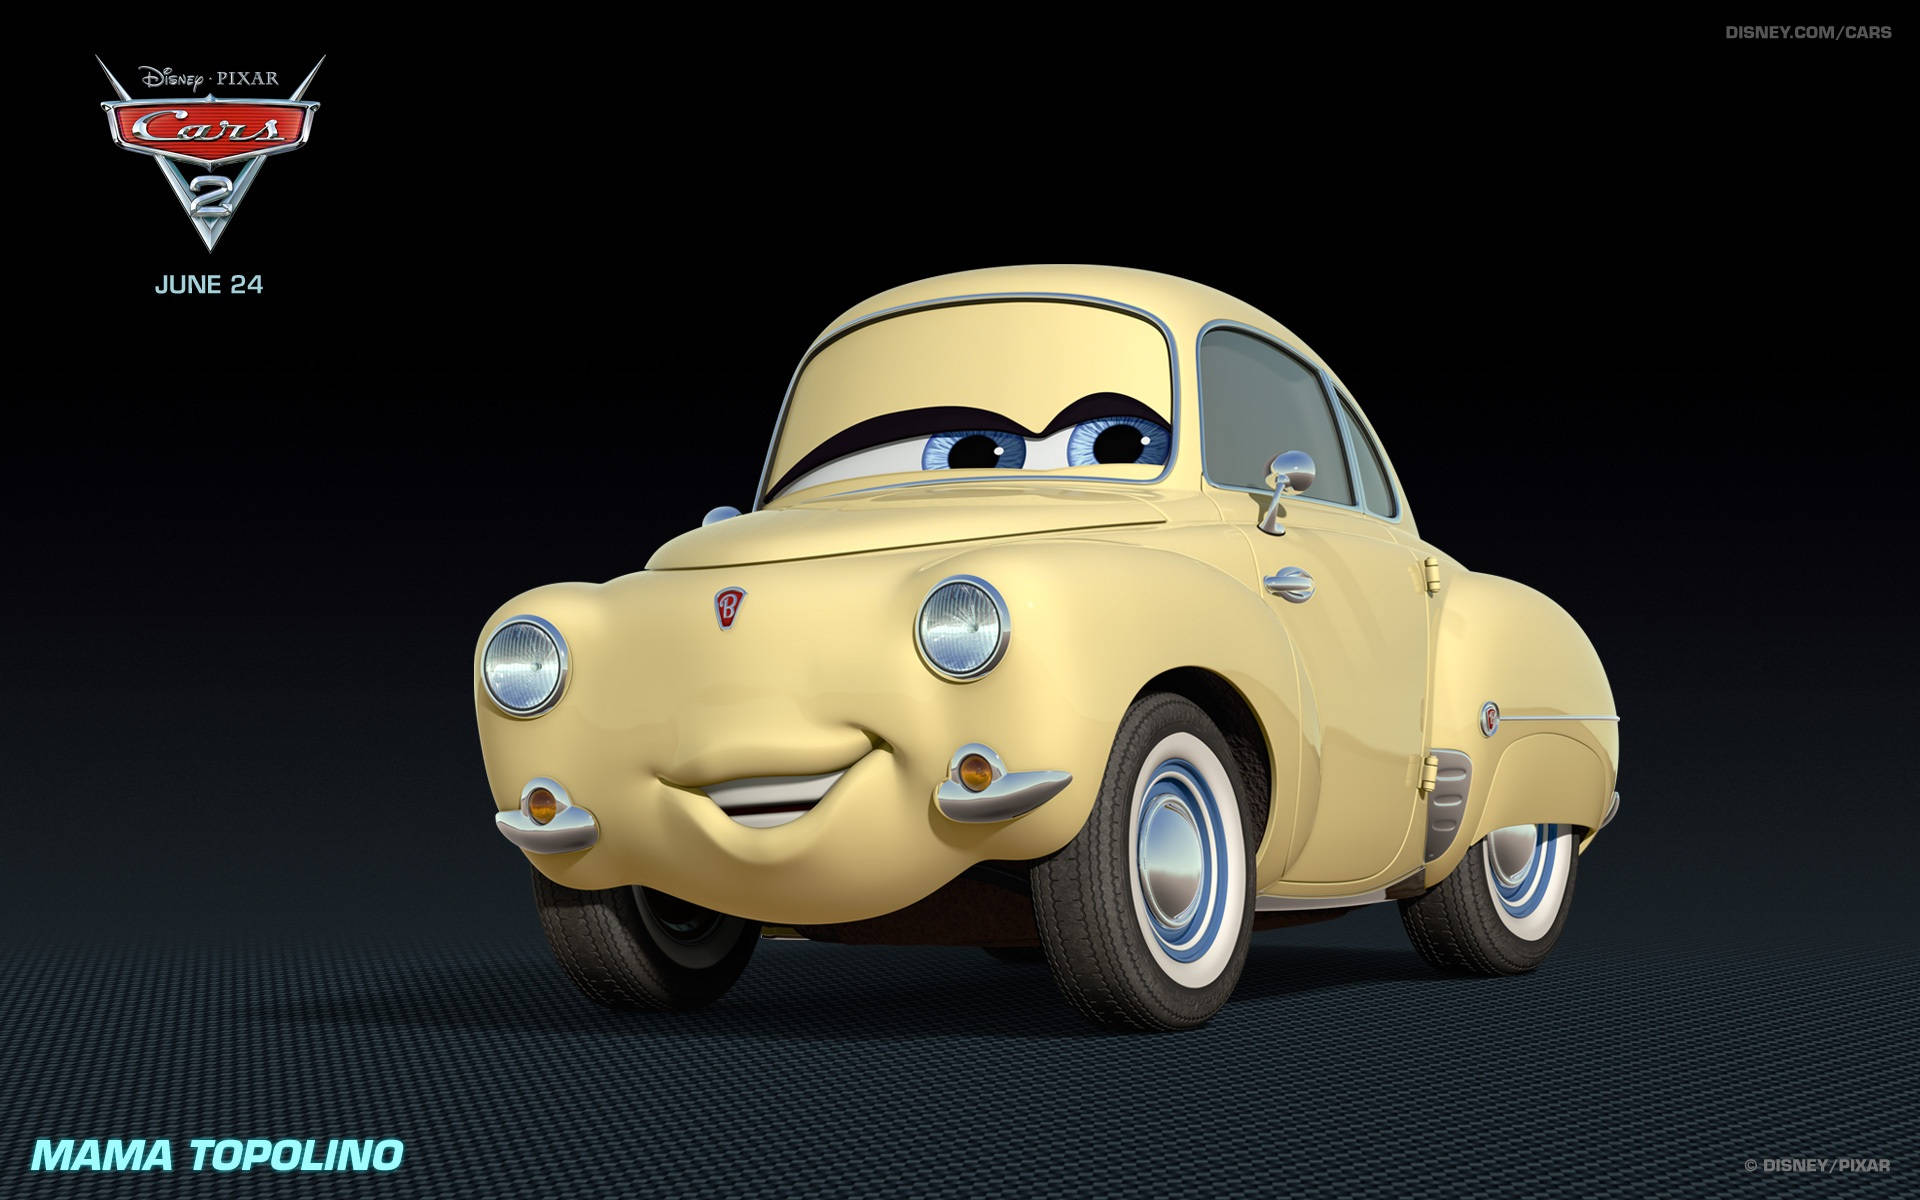 Mama Topolino From Disney Pixar's Cars 2 Background